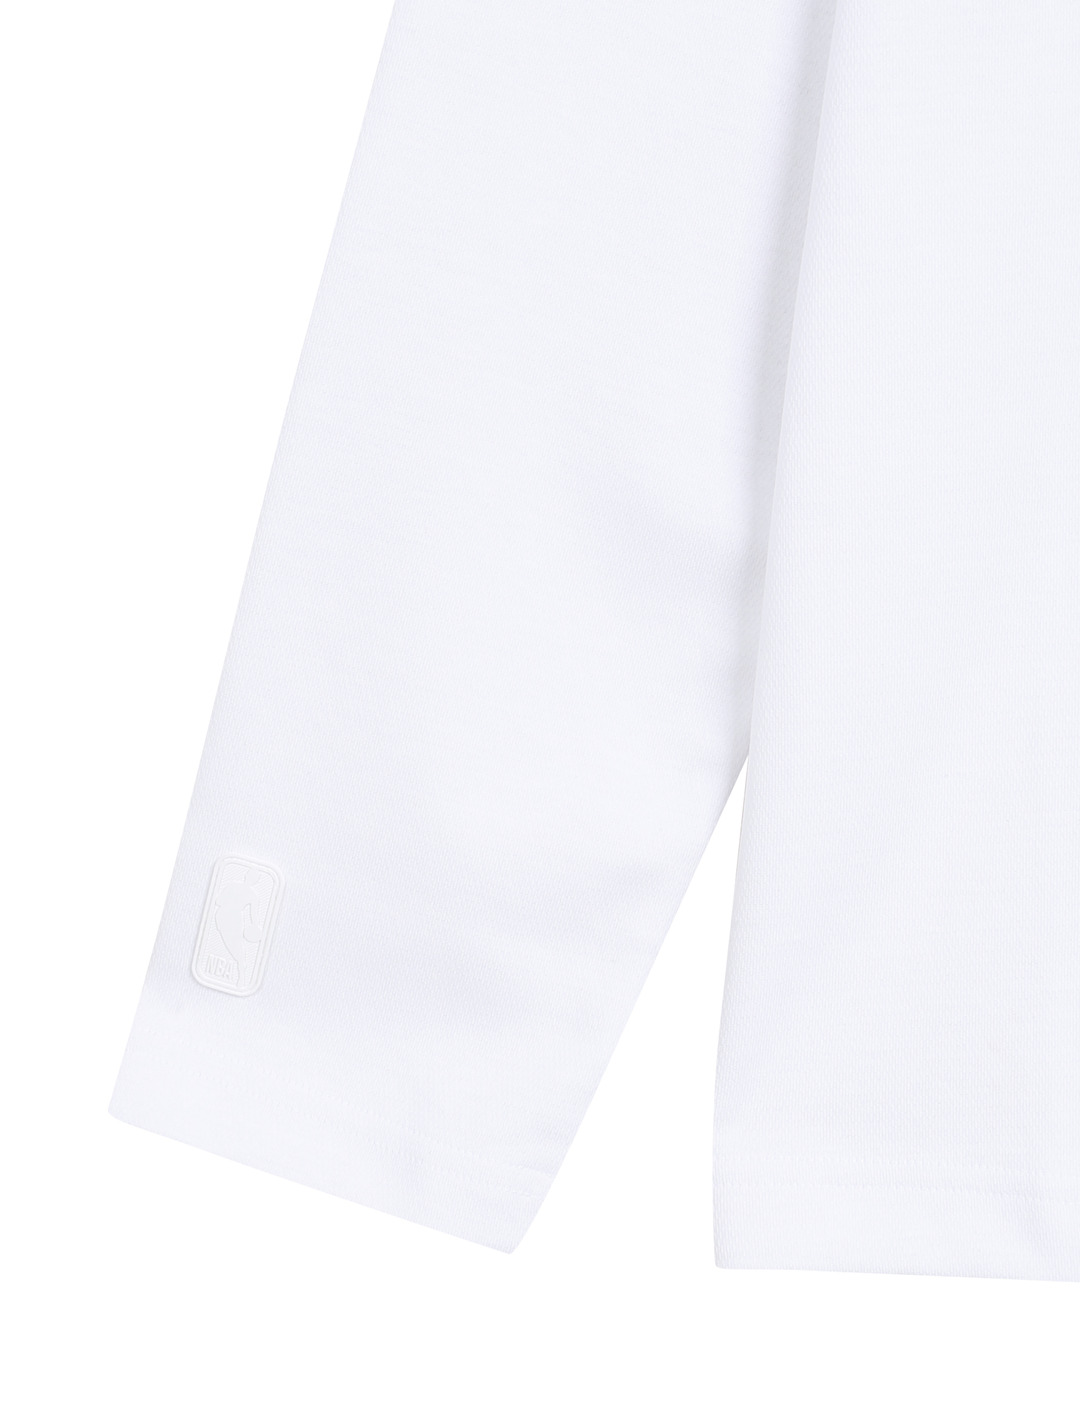 NBA Korea Unisex NYK KNICKS Front Long Sleeve Cotton Tee Shirt White, Graphic Tees for Men, KOODING in 2023